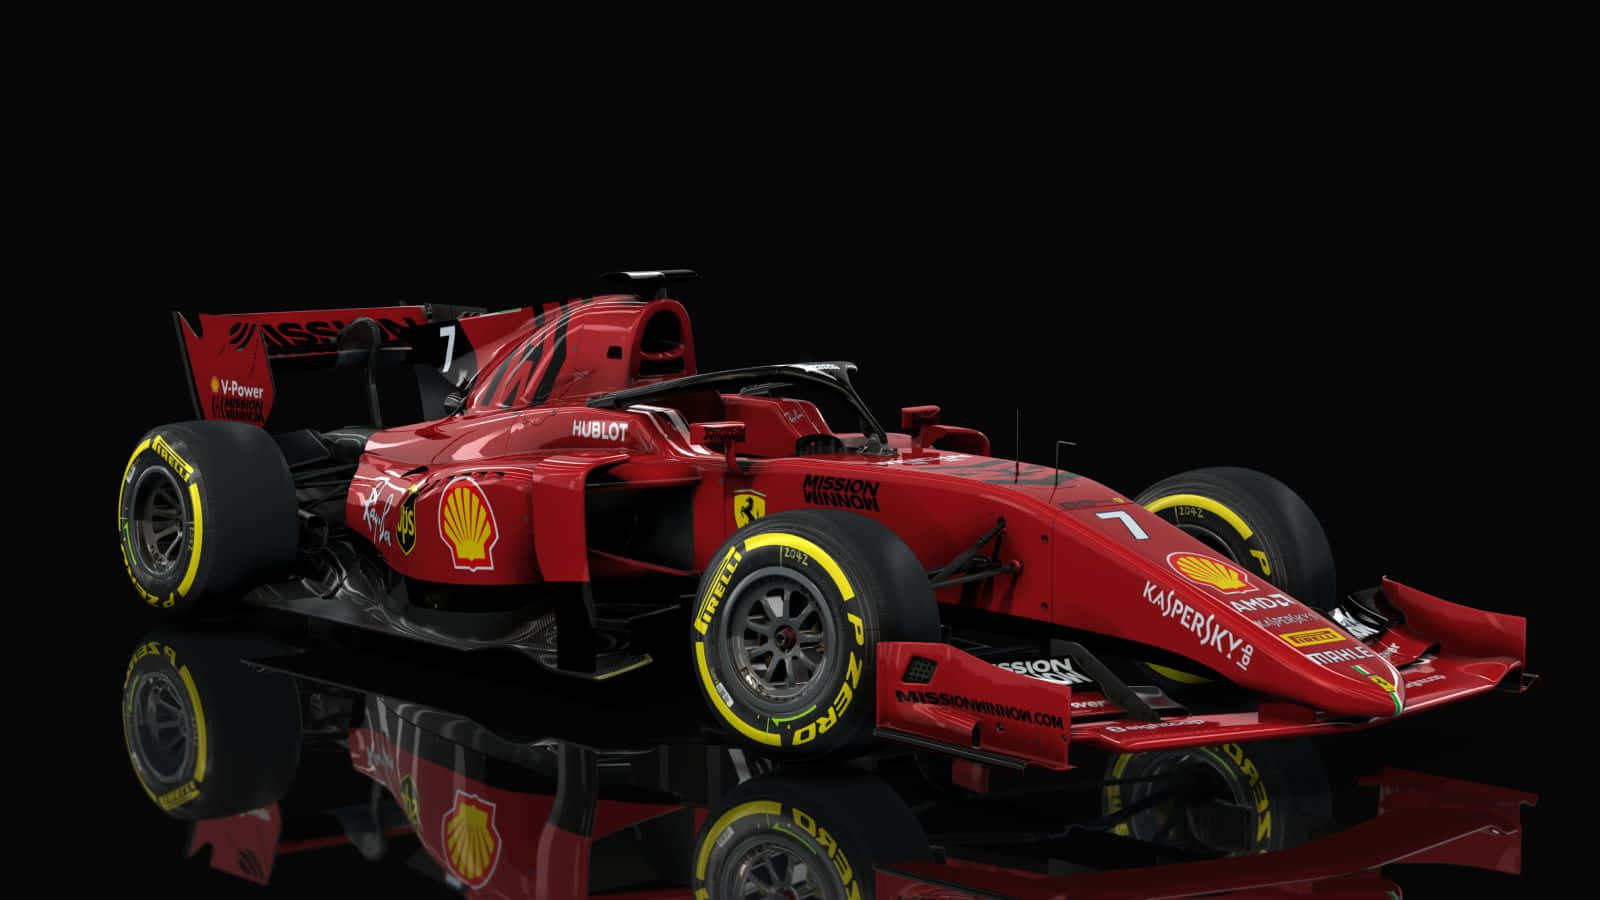 Ready for the 2019 Race Season - Ferrari F1 Car Wallpaper